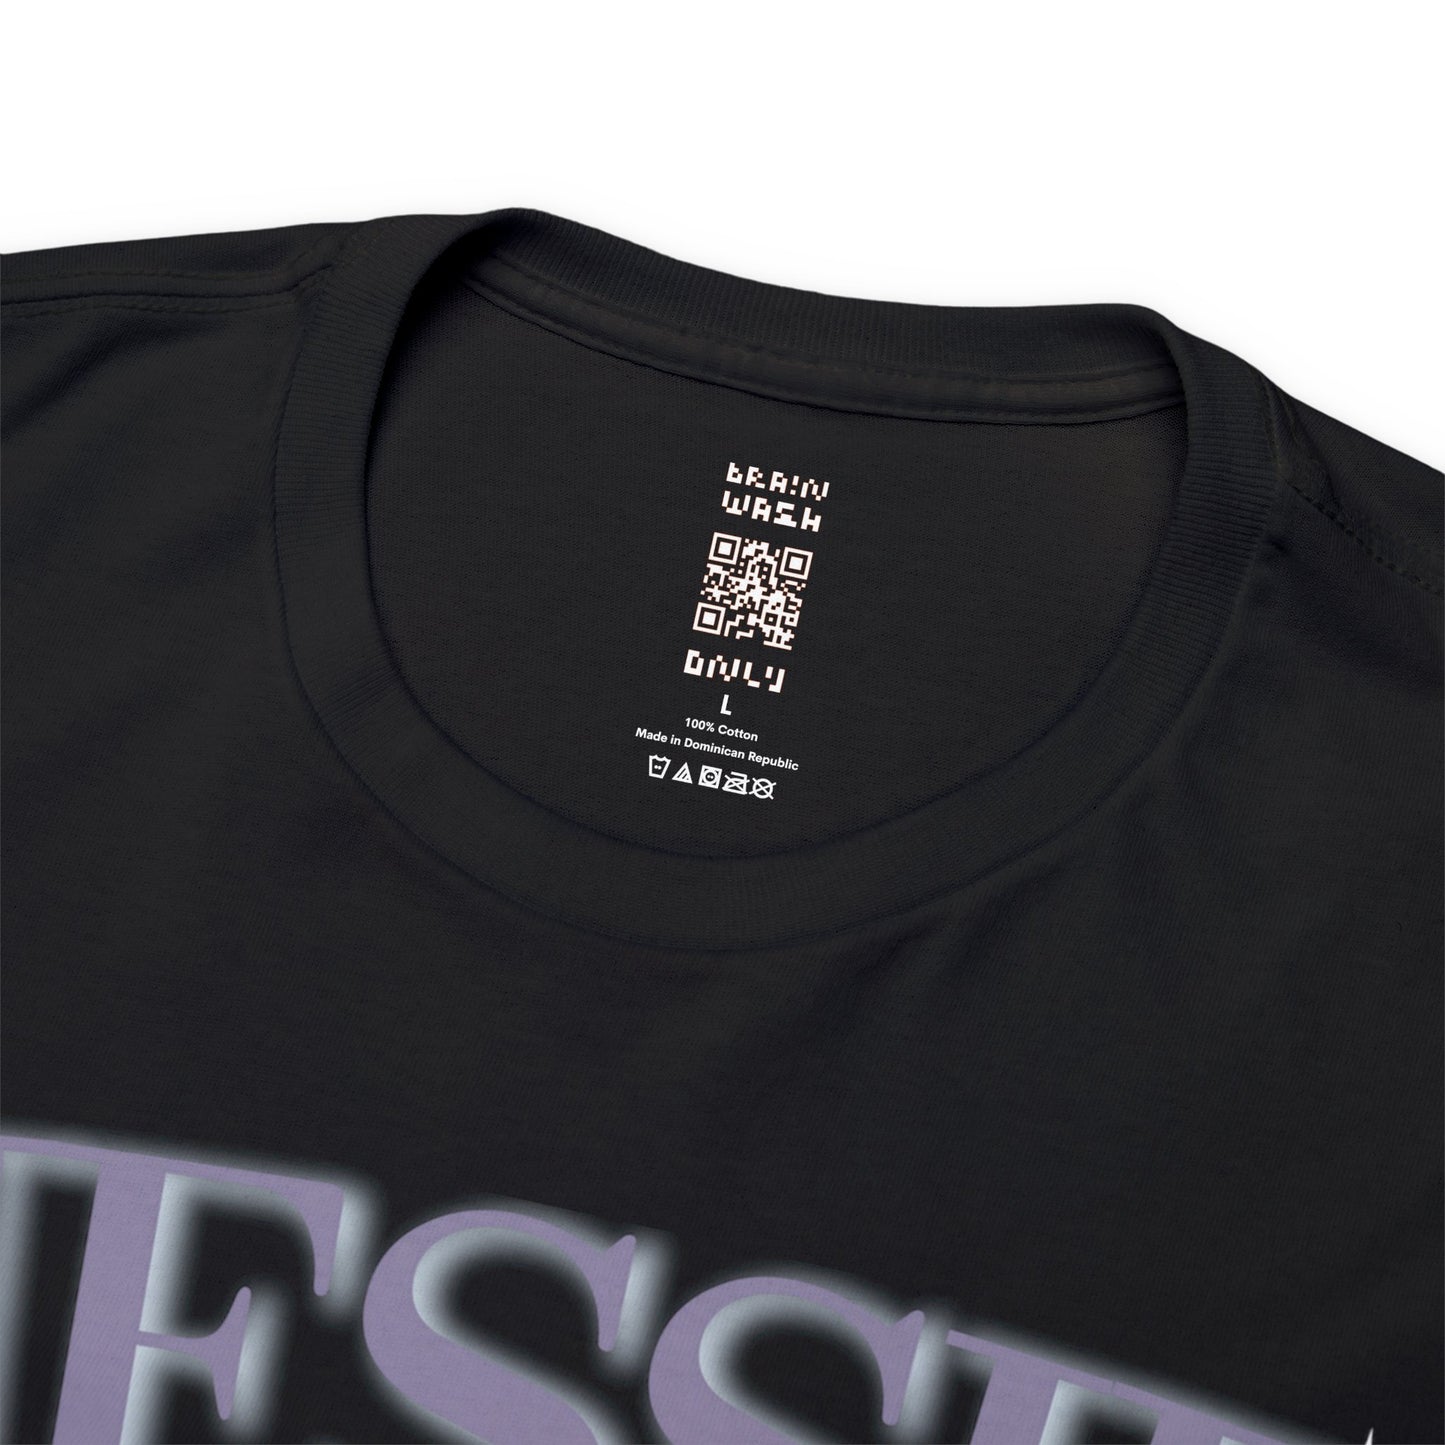 Nessie Loch Ness King Homage T-Shirt